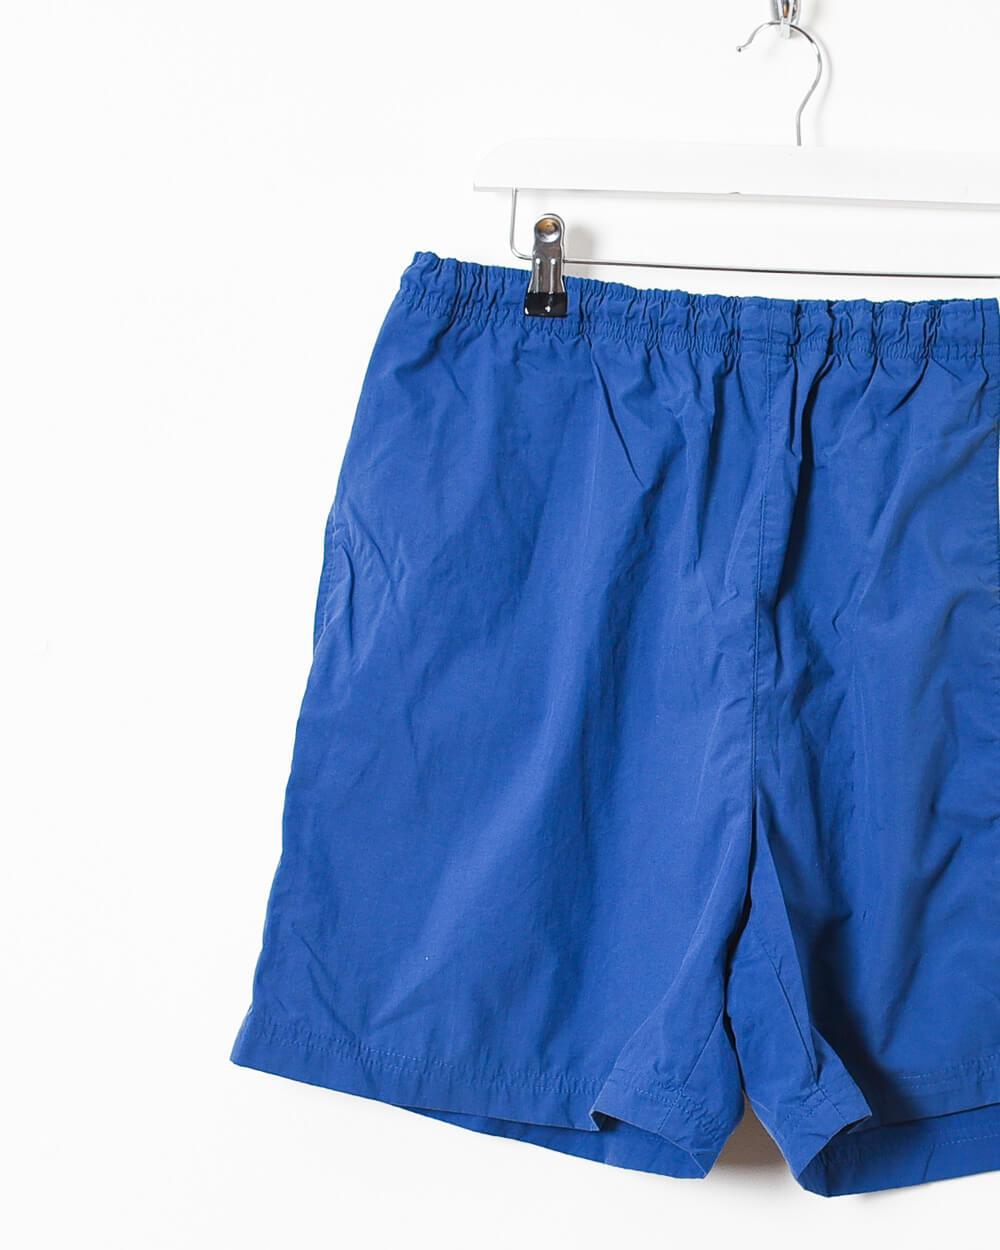 Blue Nike Swimwear Shorts - W34